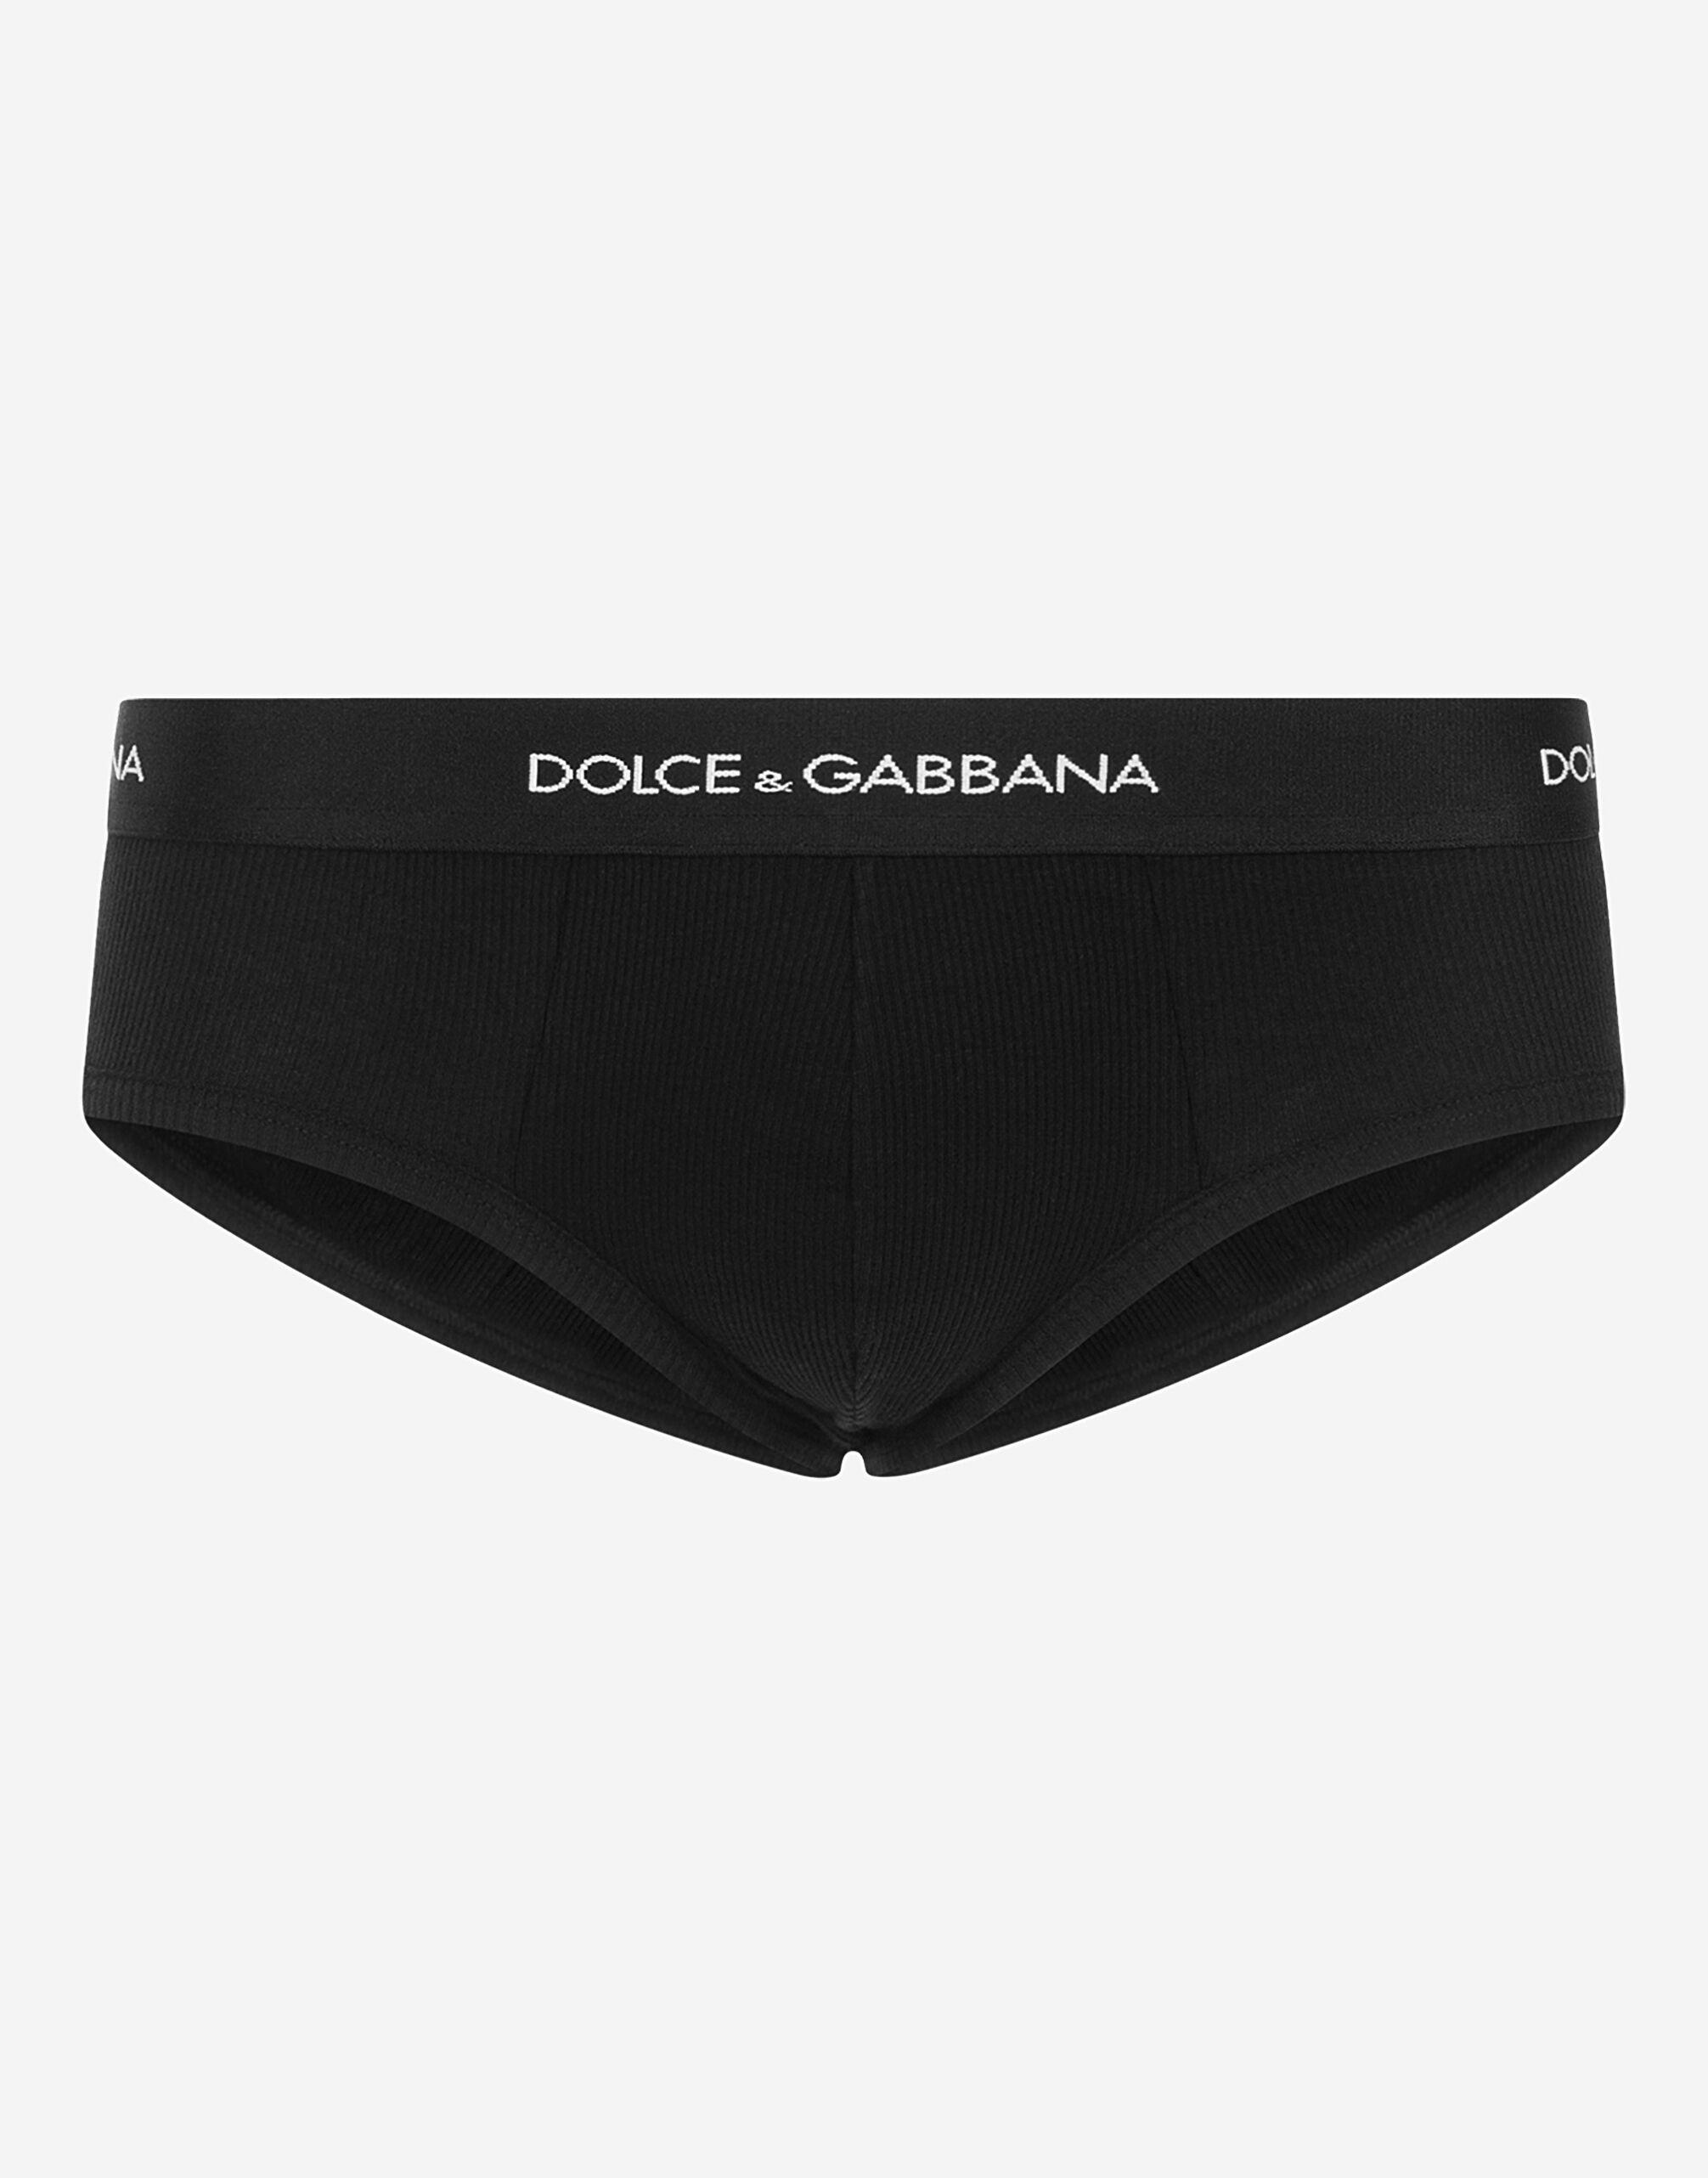 White Dolce & Gabbana Signature Crowns Waistband Men's Brando Brief